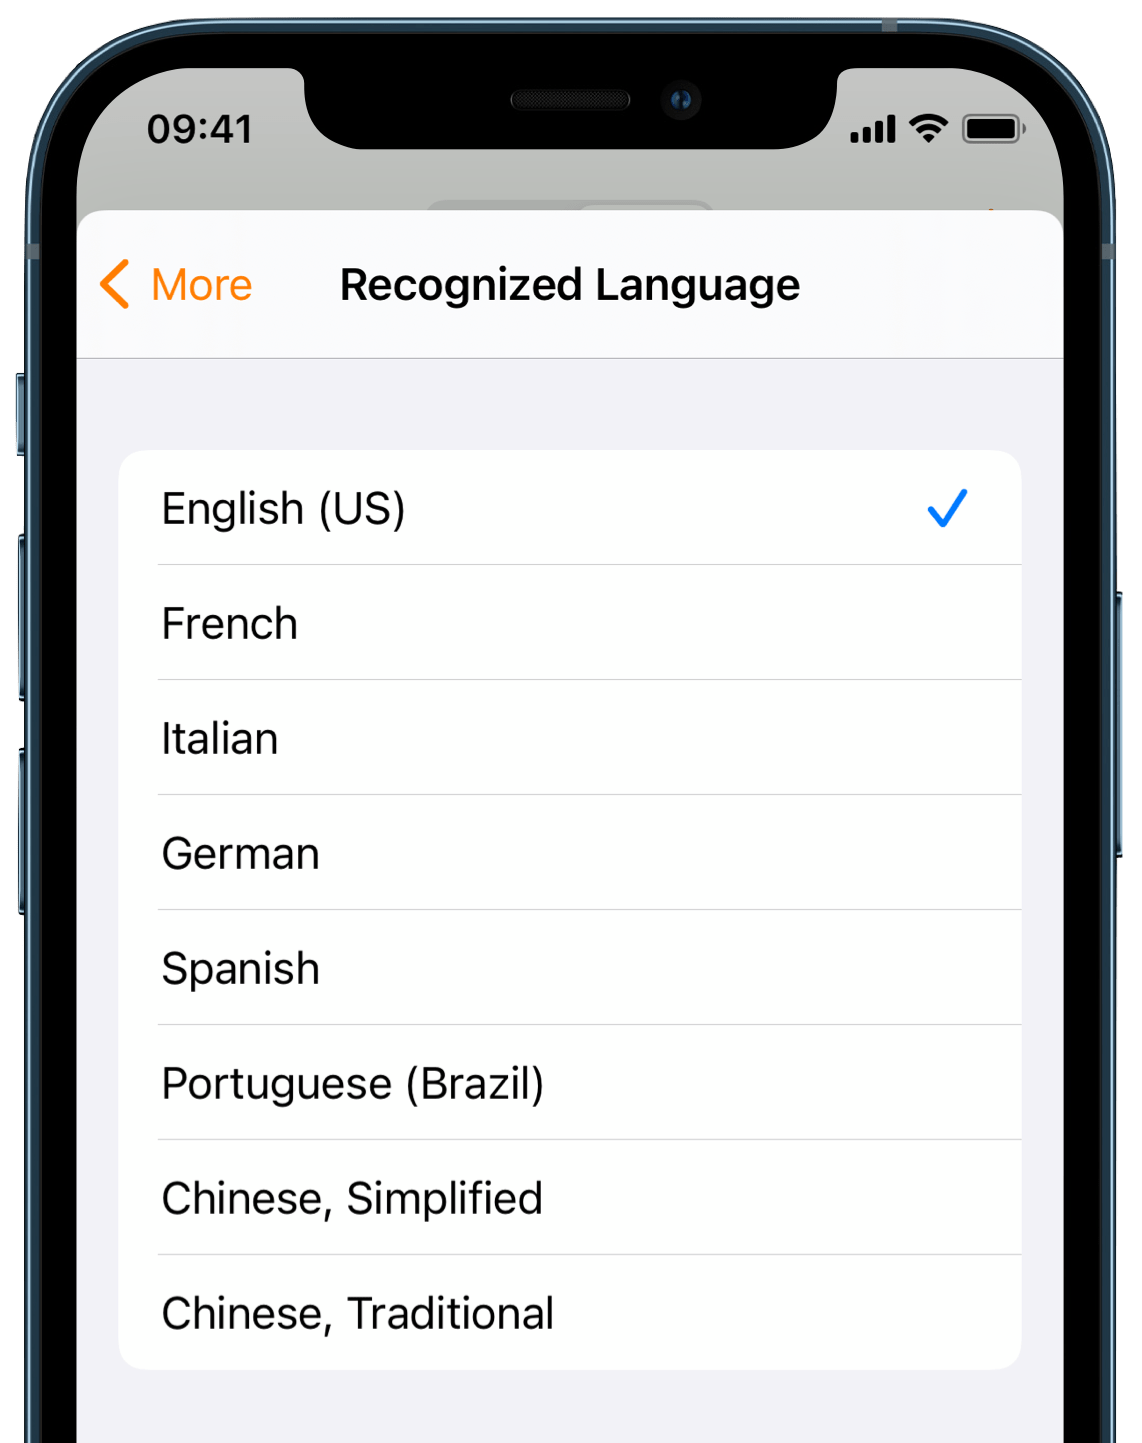 Recognized language settings screen